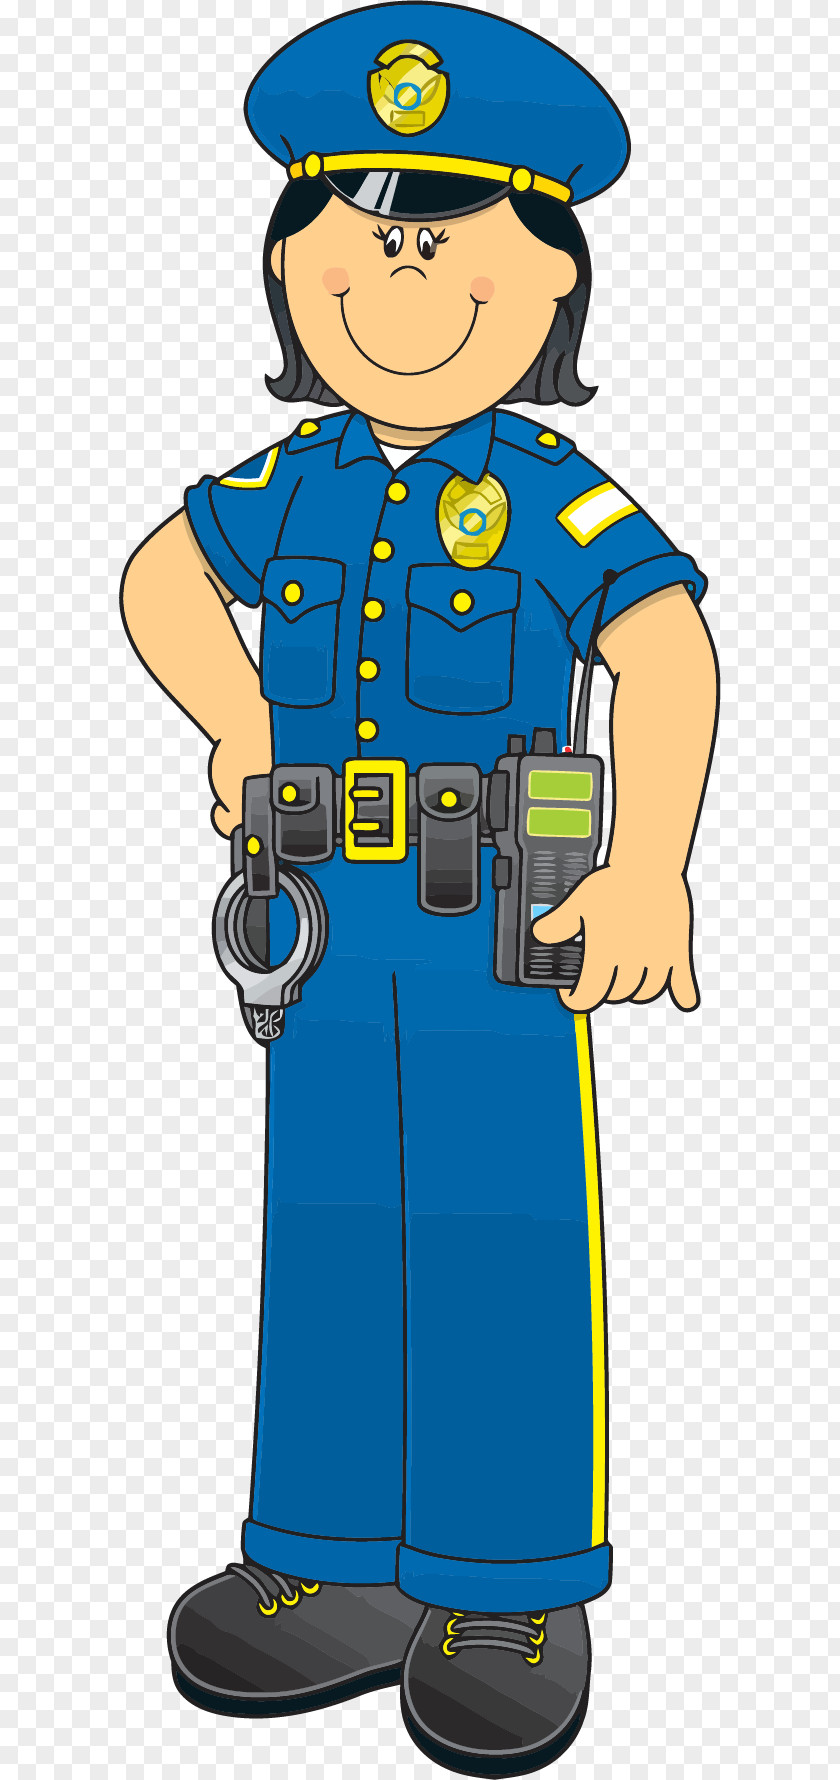 Policeman Online Community Manager Laborer Clip Art PNG